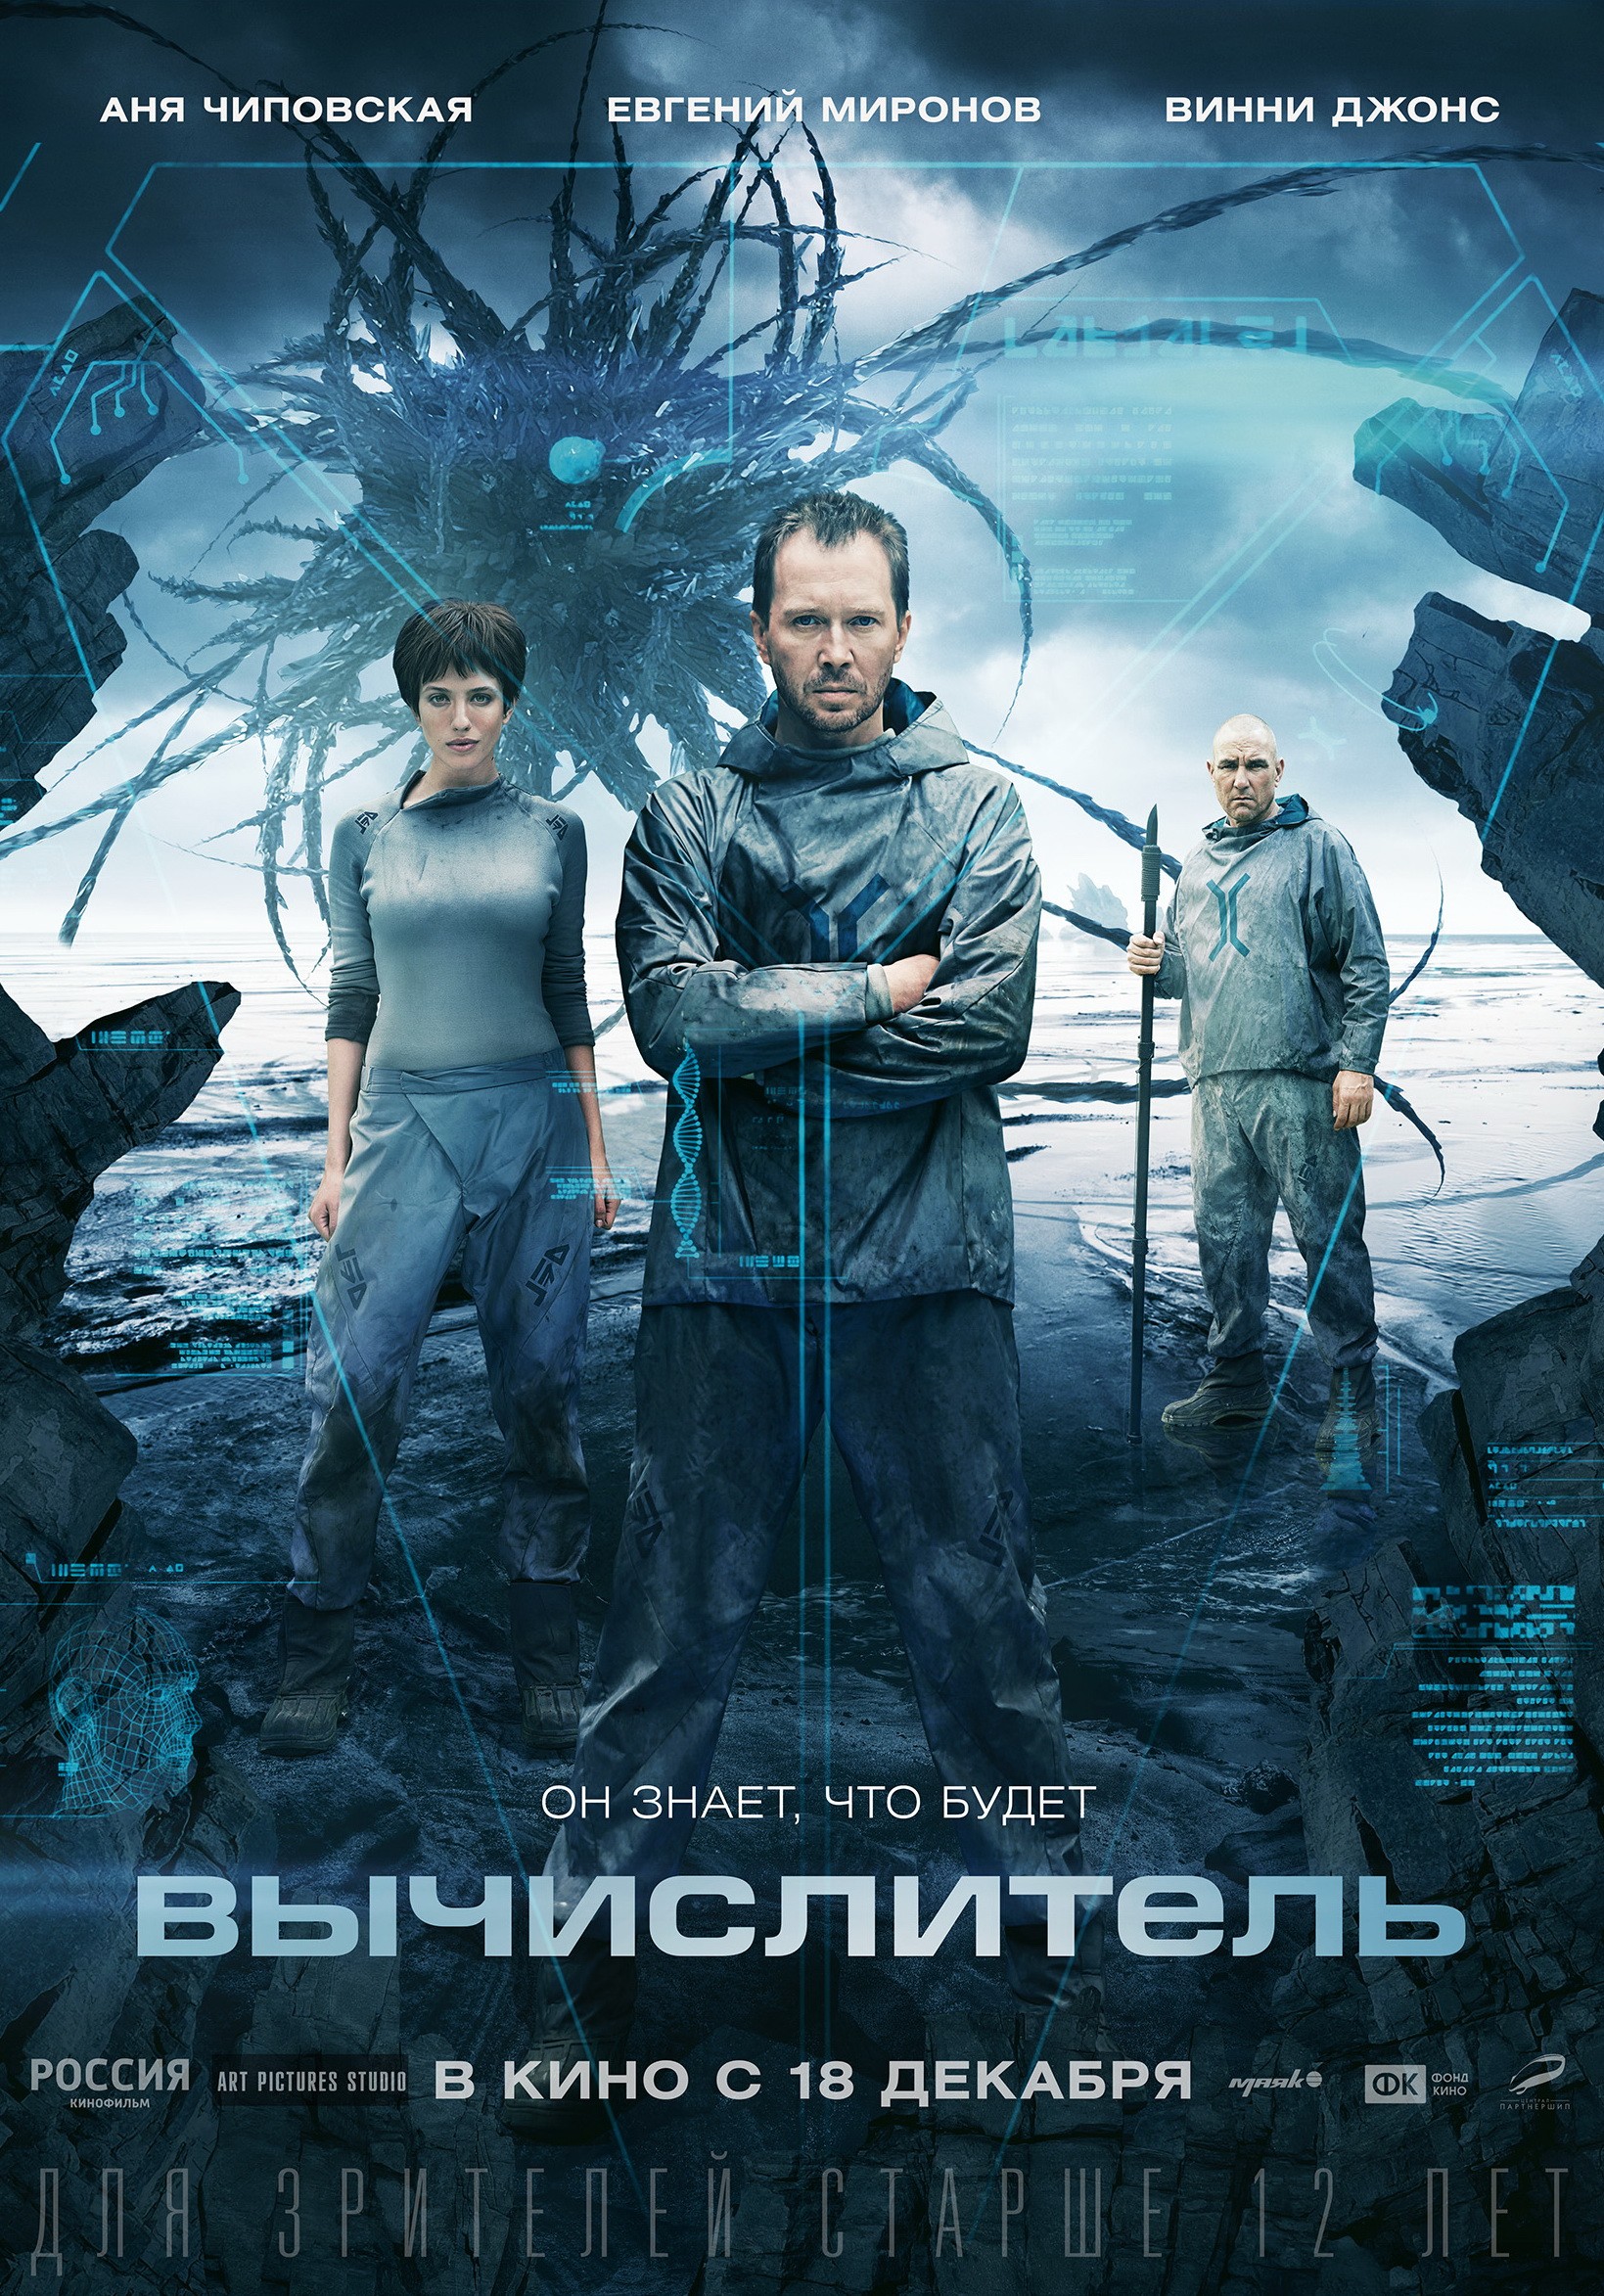 Mega Sized Movie Poster Image for Vychislitel (#4 of 4)